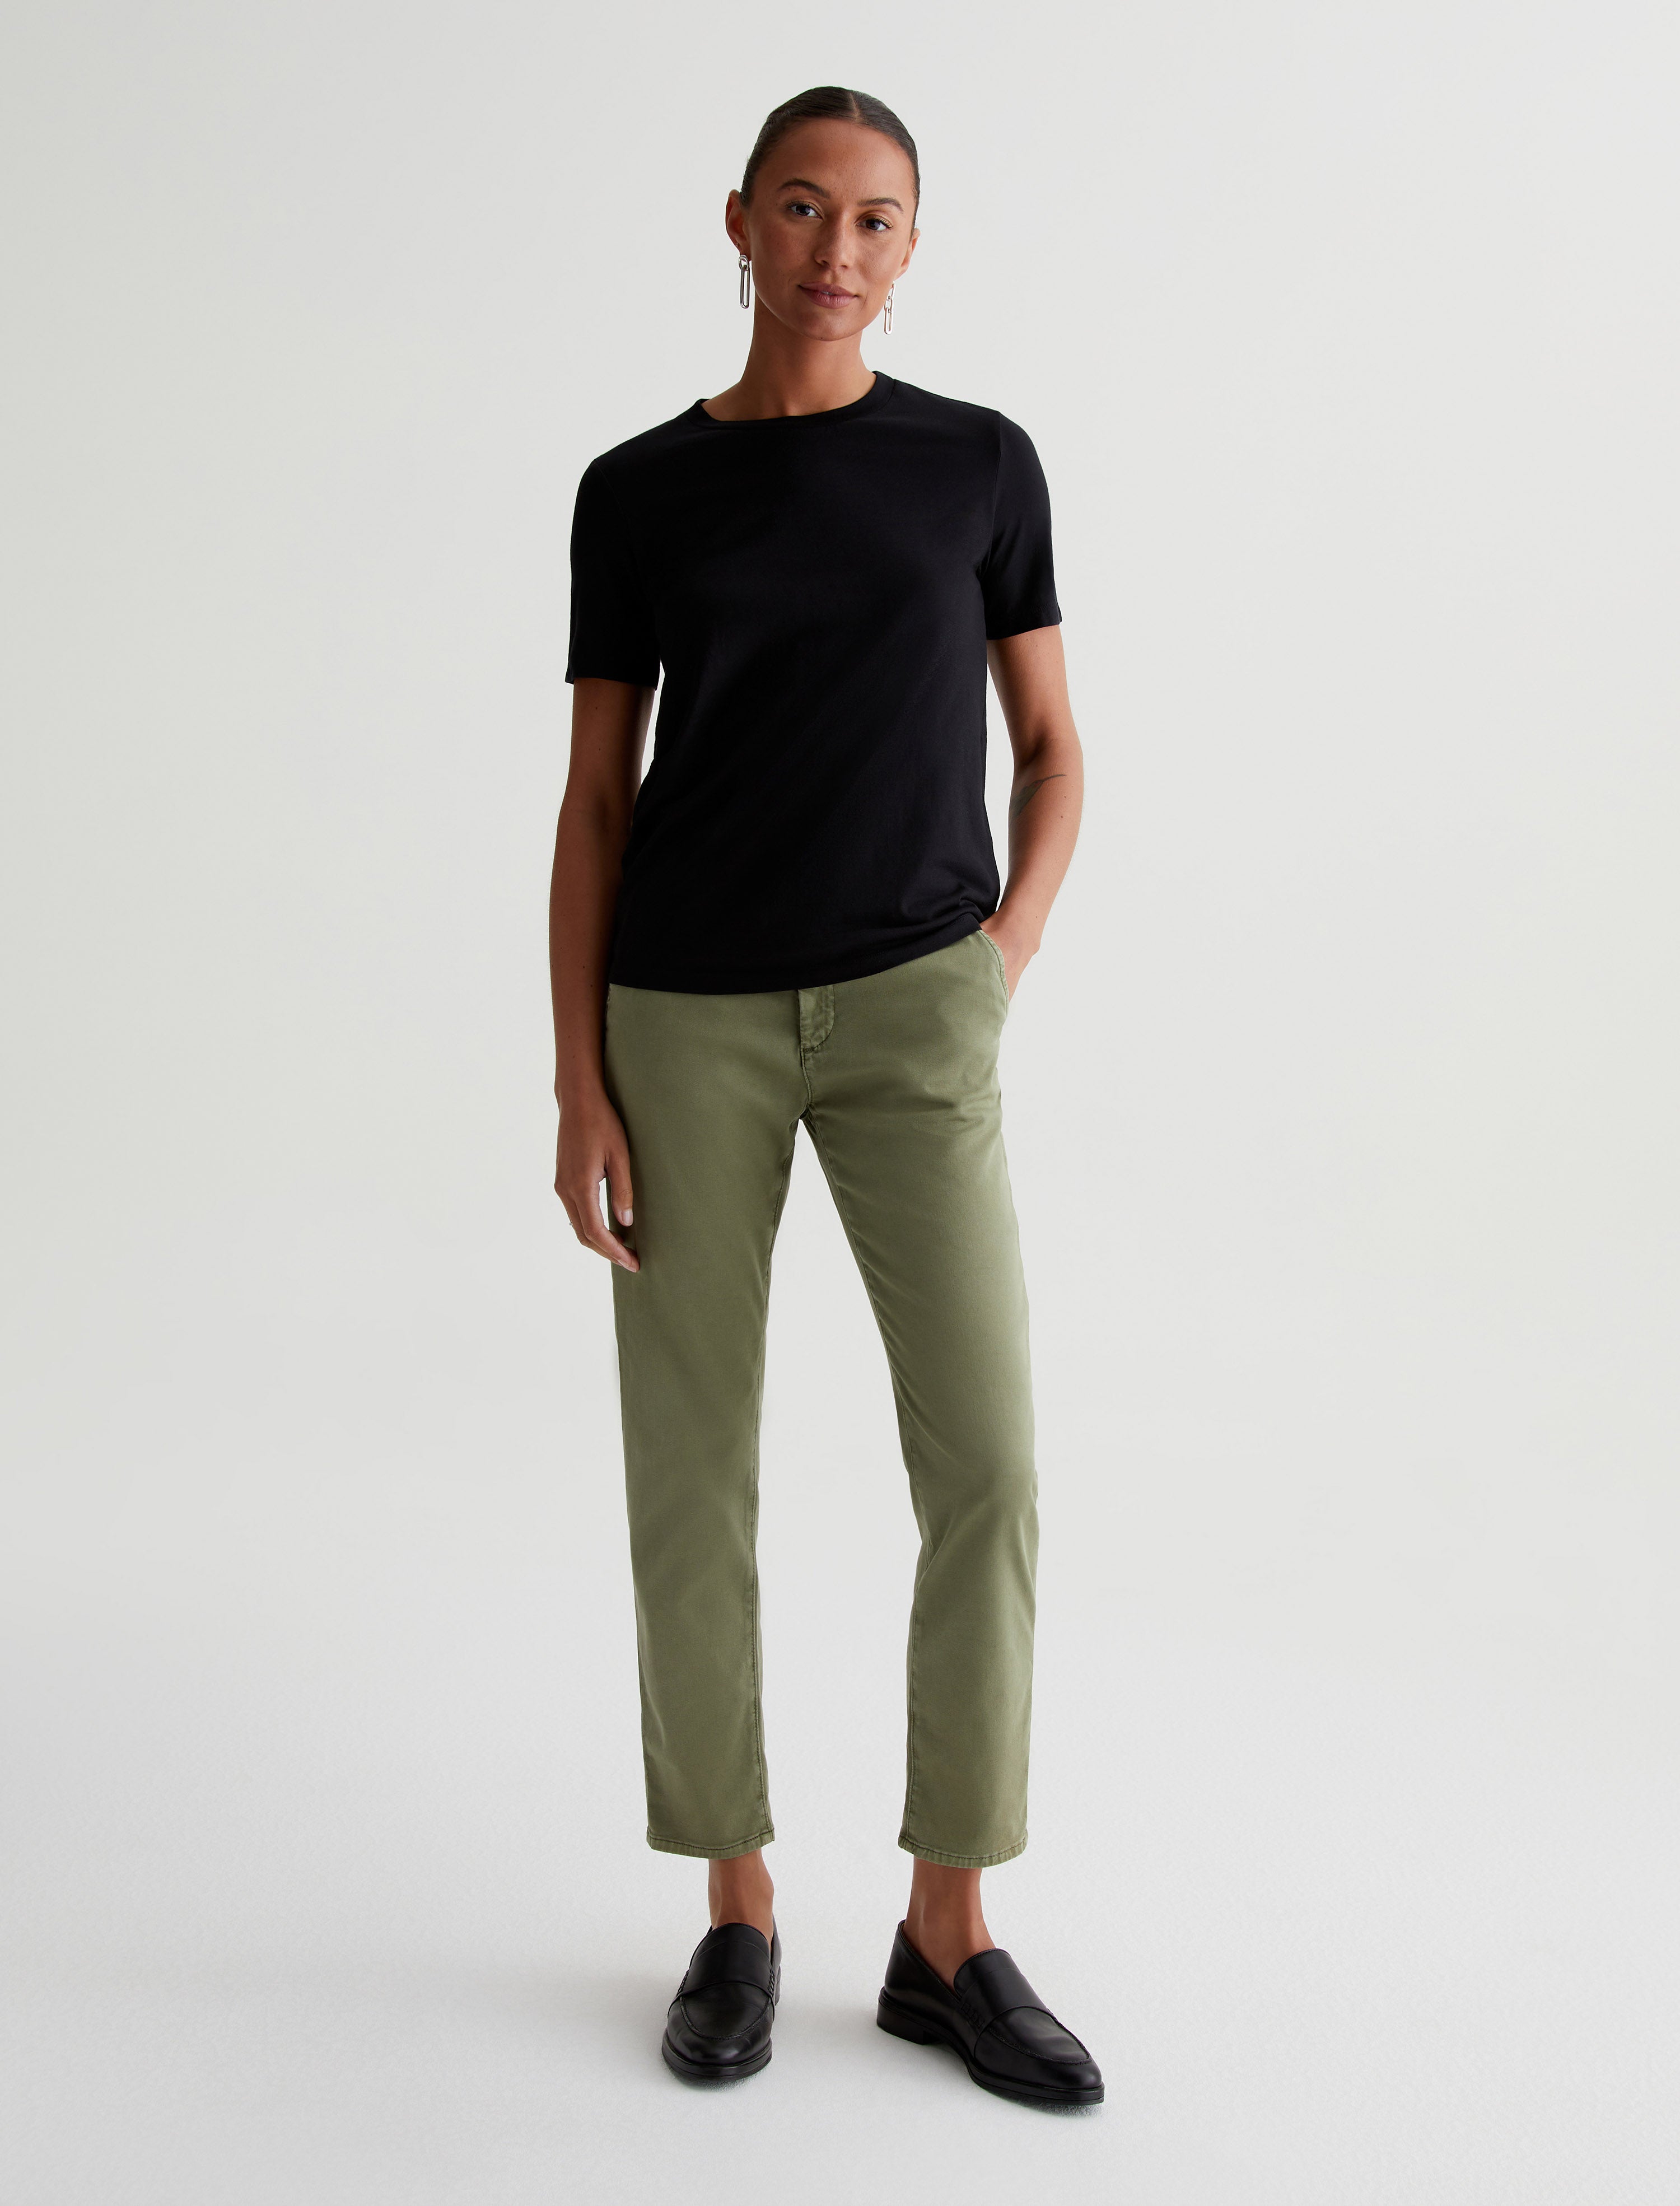 Olive Green Trouser Pants - High-Waisted Pants - Wide-Leg Trouser - Lulus